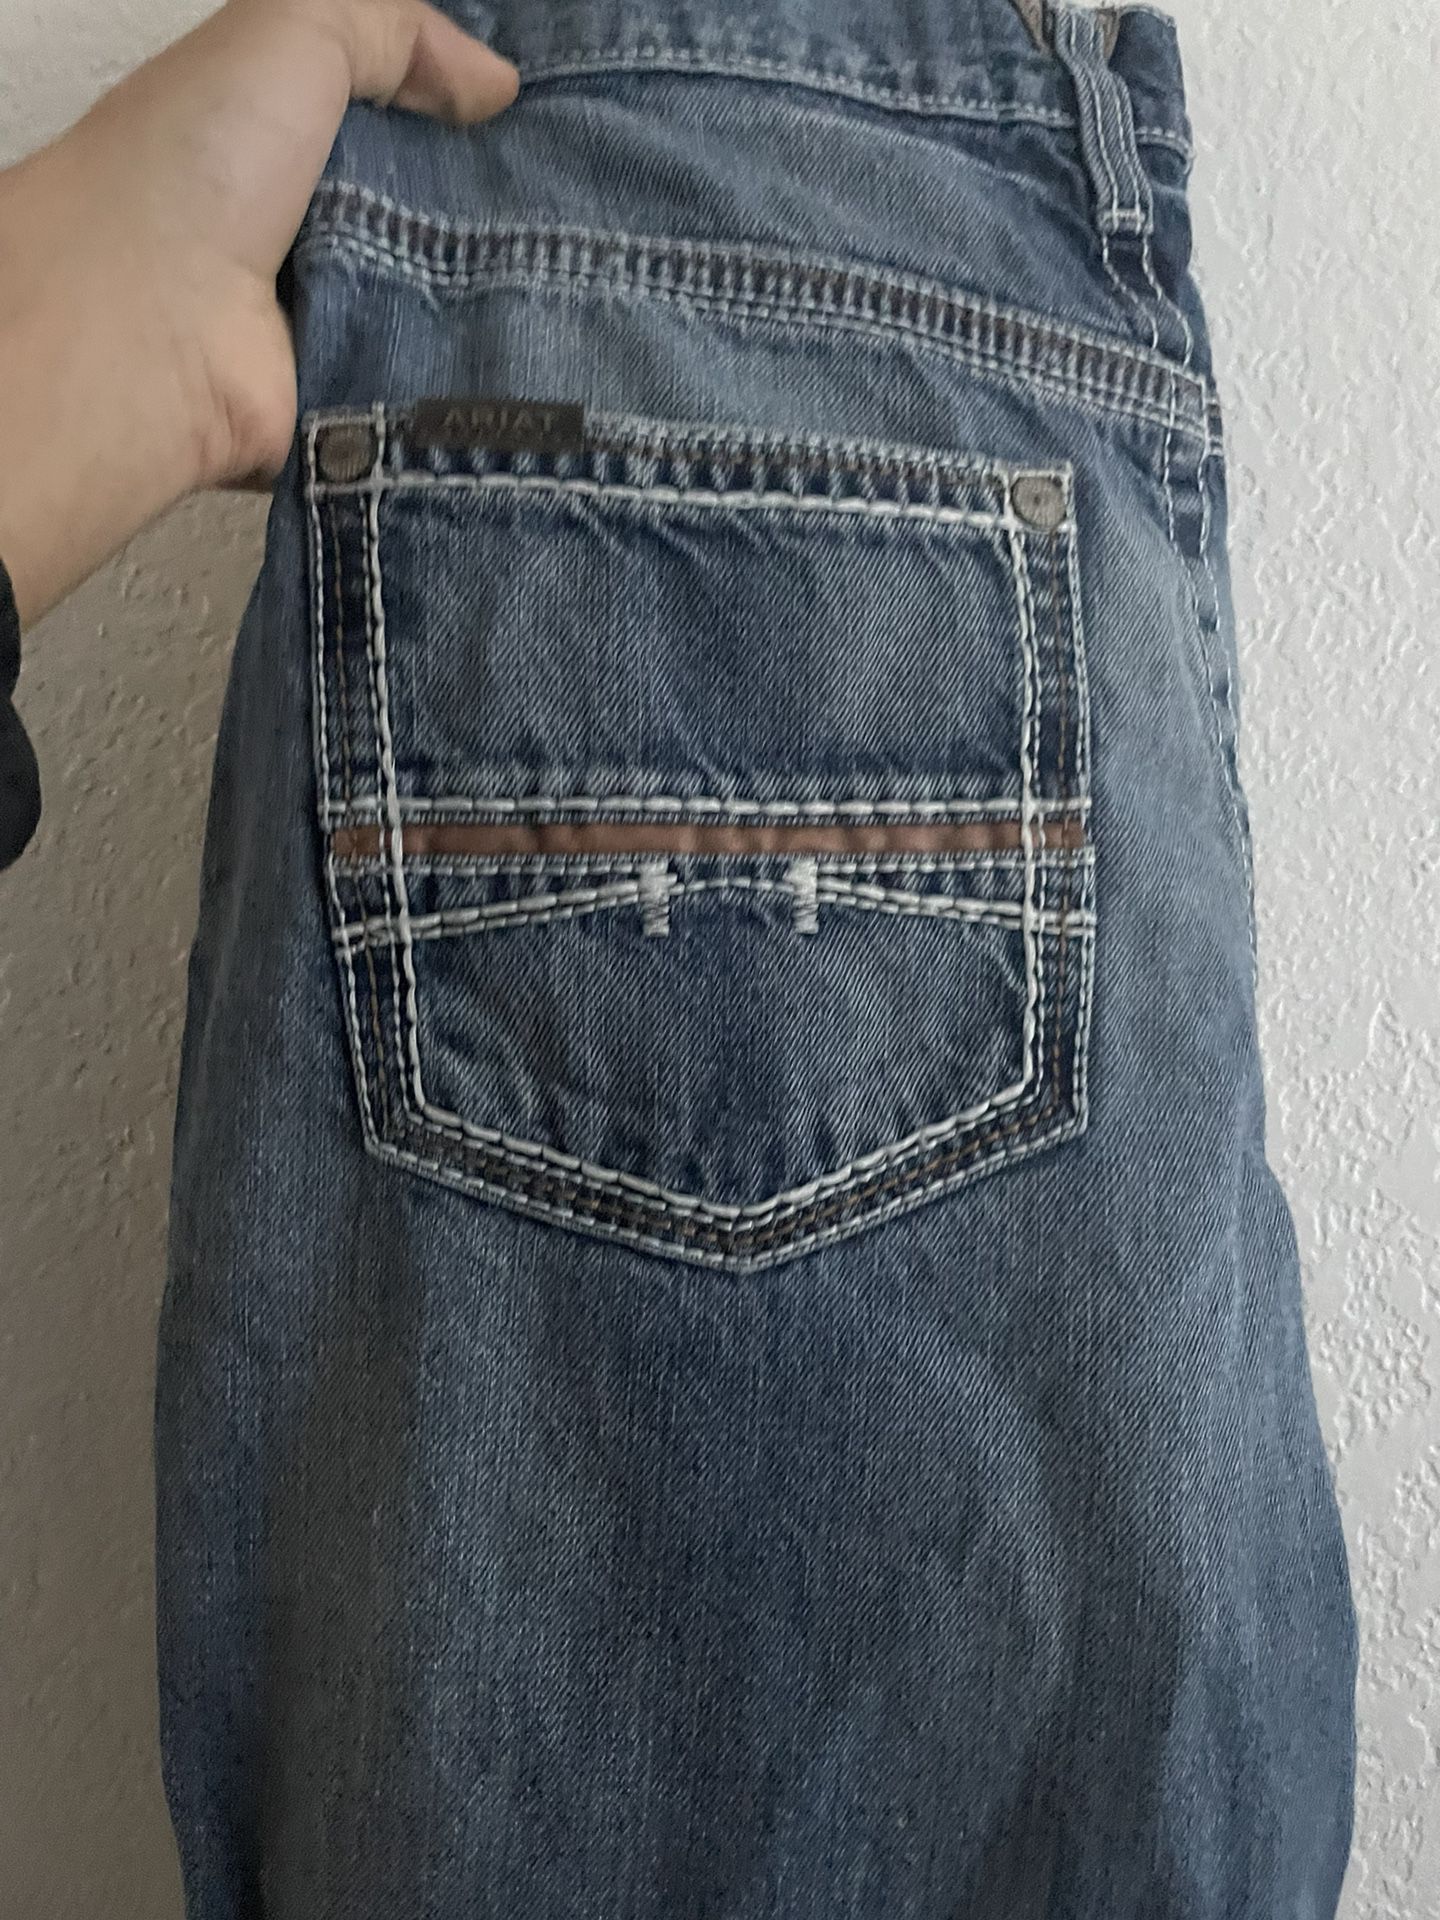 Ariat Boot Cut Jeans